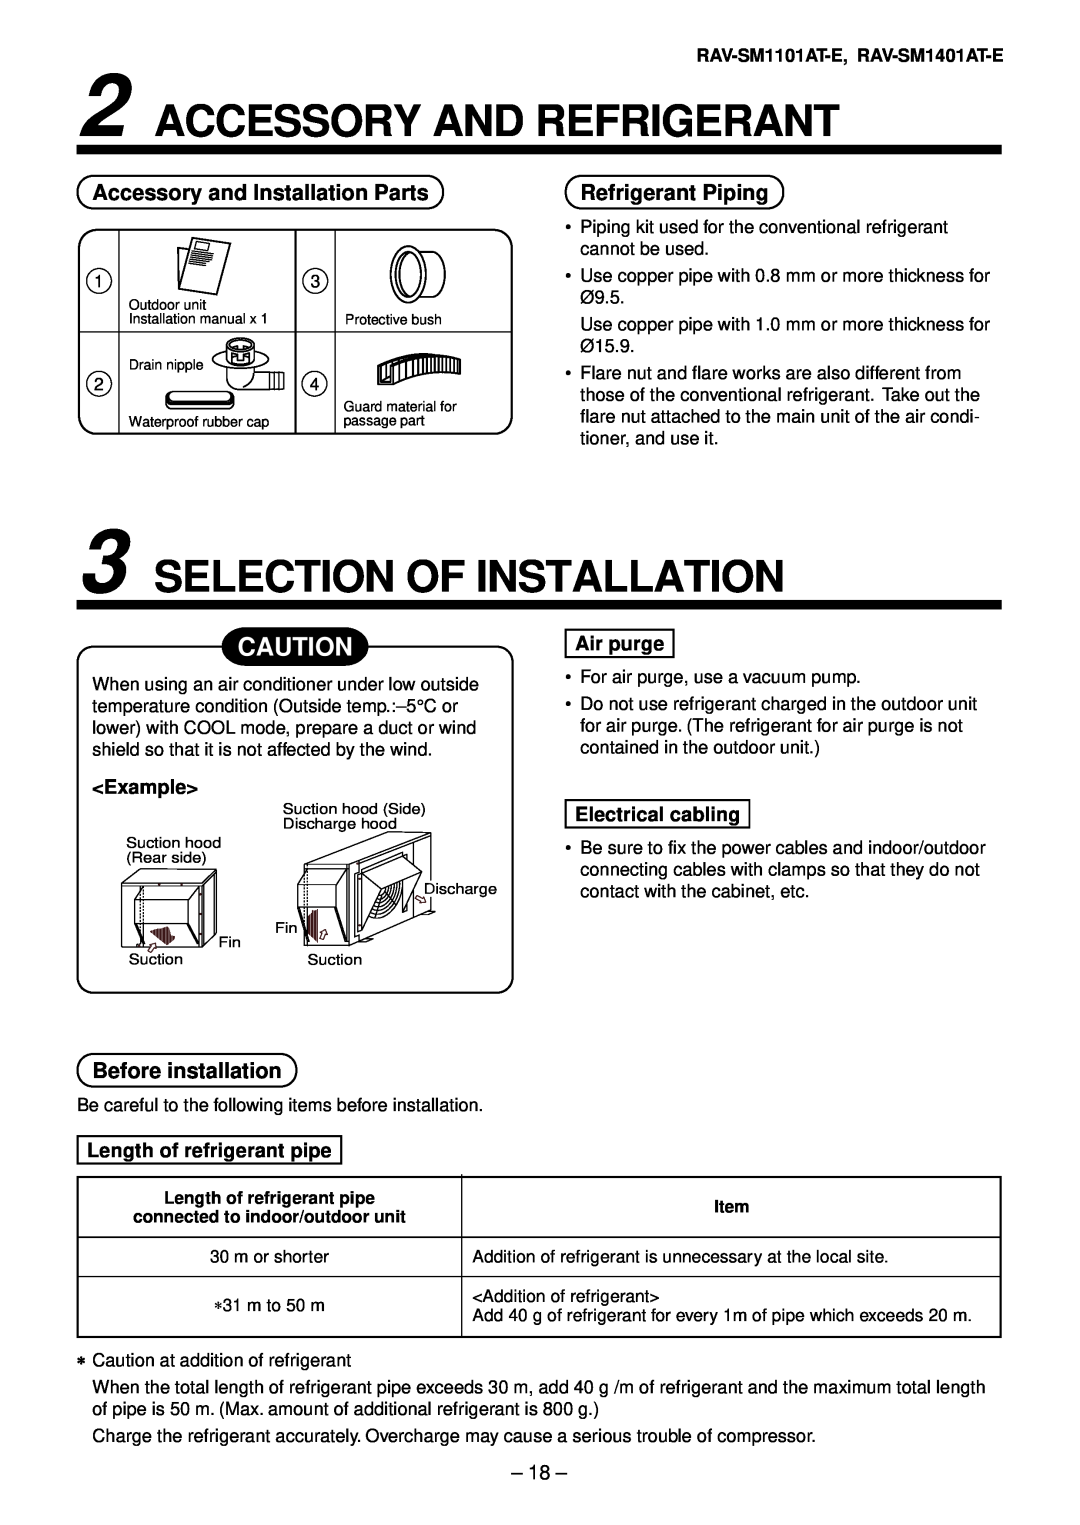 Toshiba RAV-SM801AT-E Accessory And Refrigerant, Selection Of Installation, Accessory and Installation Parts, Air purge 